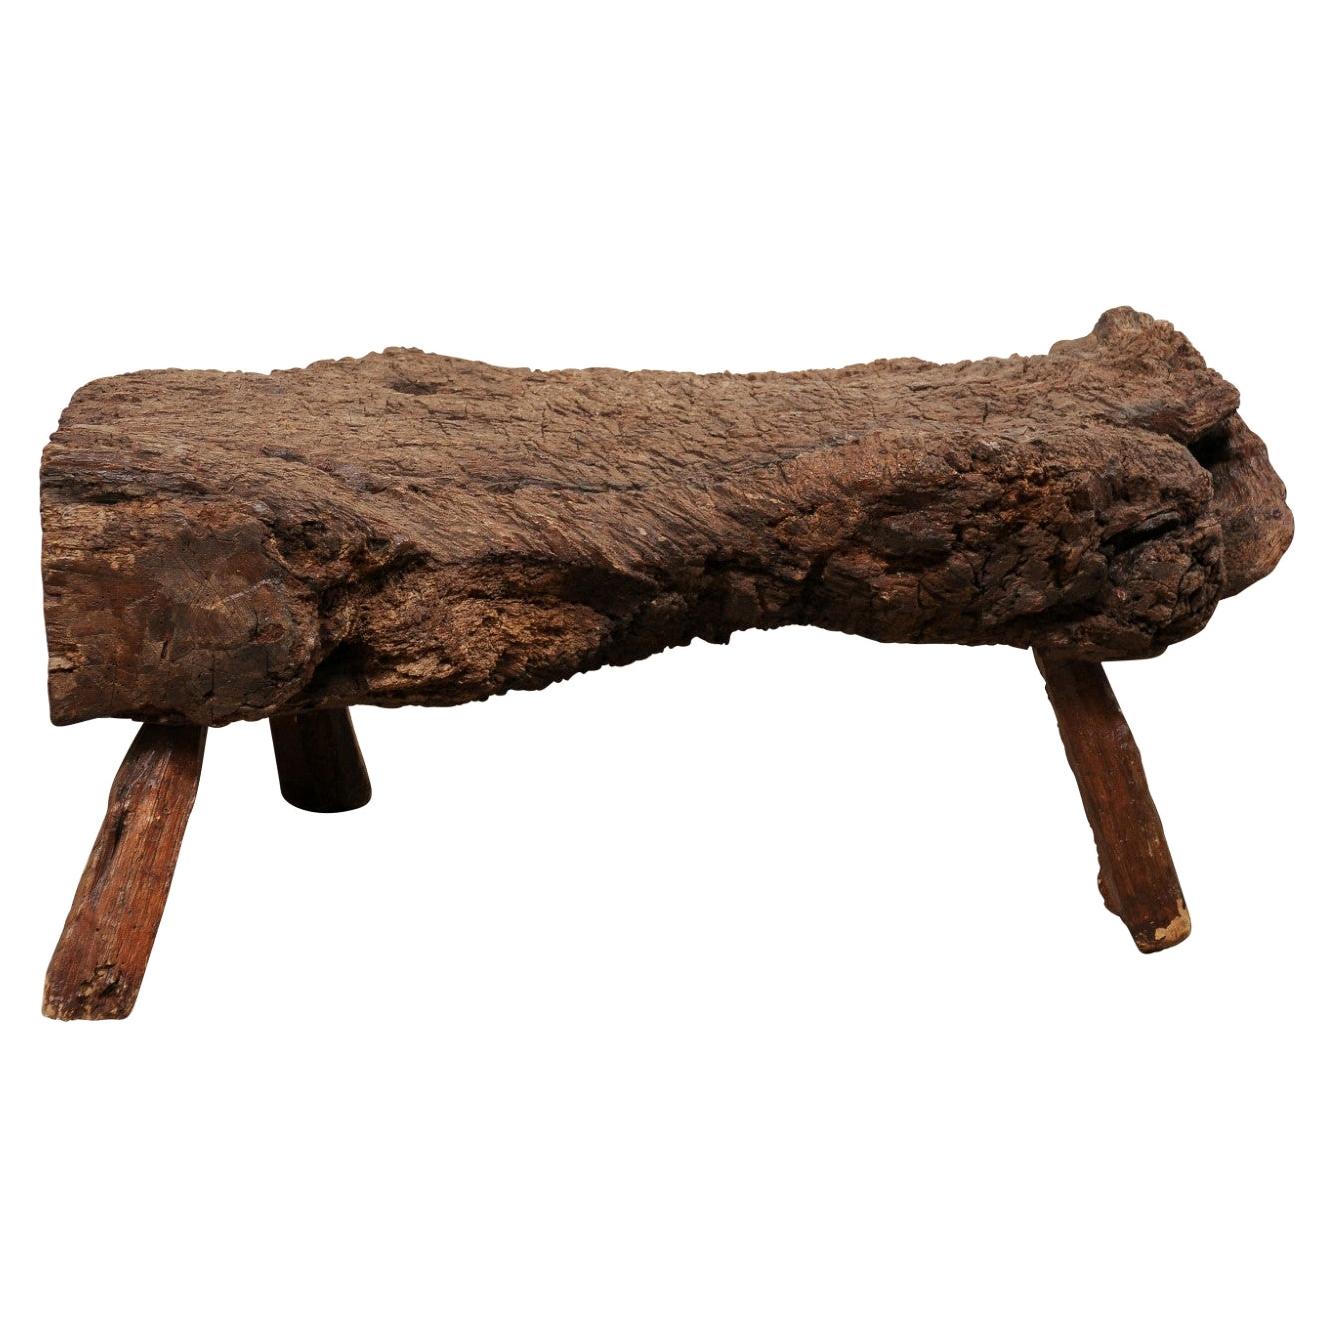 Spanish Petite-Sized Knobby Live-Edge Burl Wood Table or Stool on Limb Legs